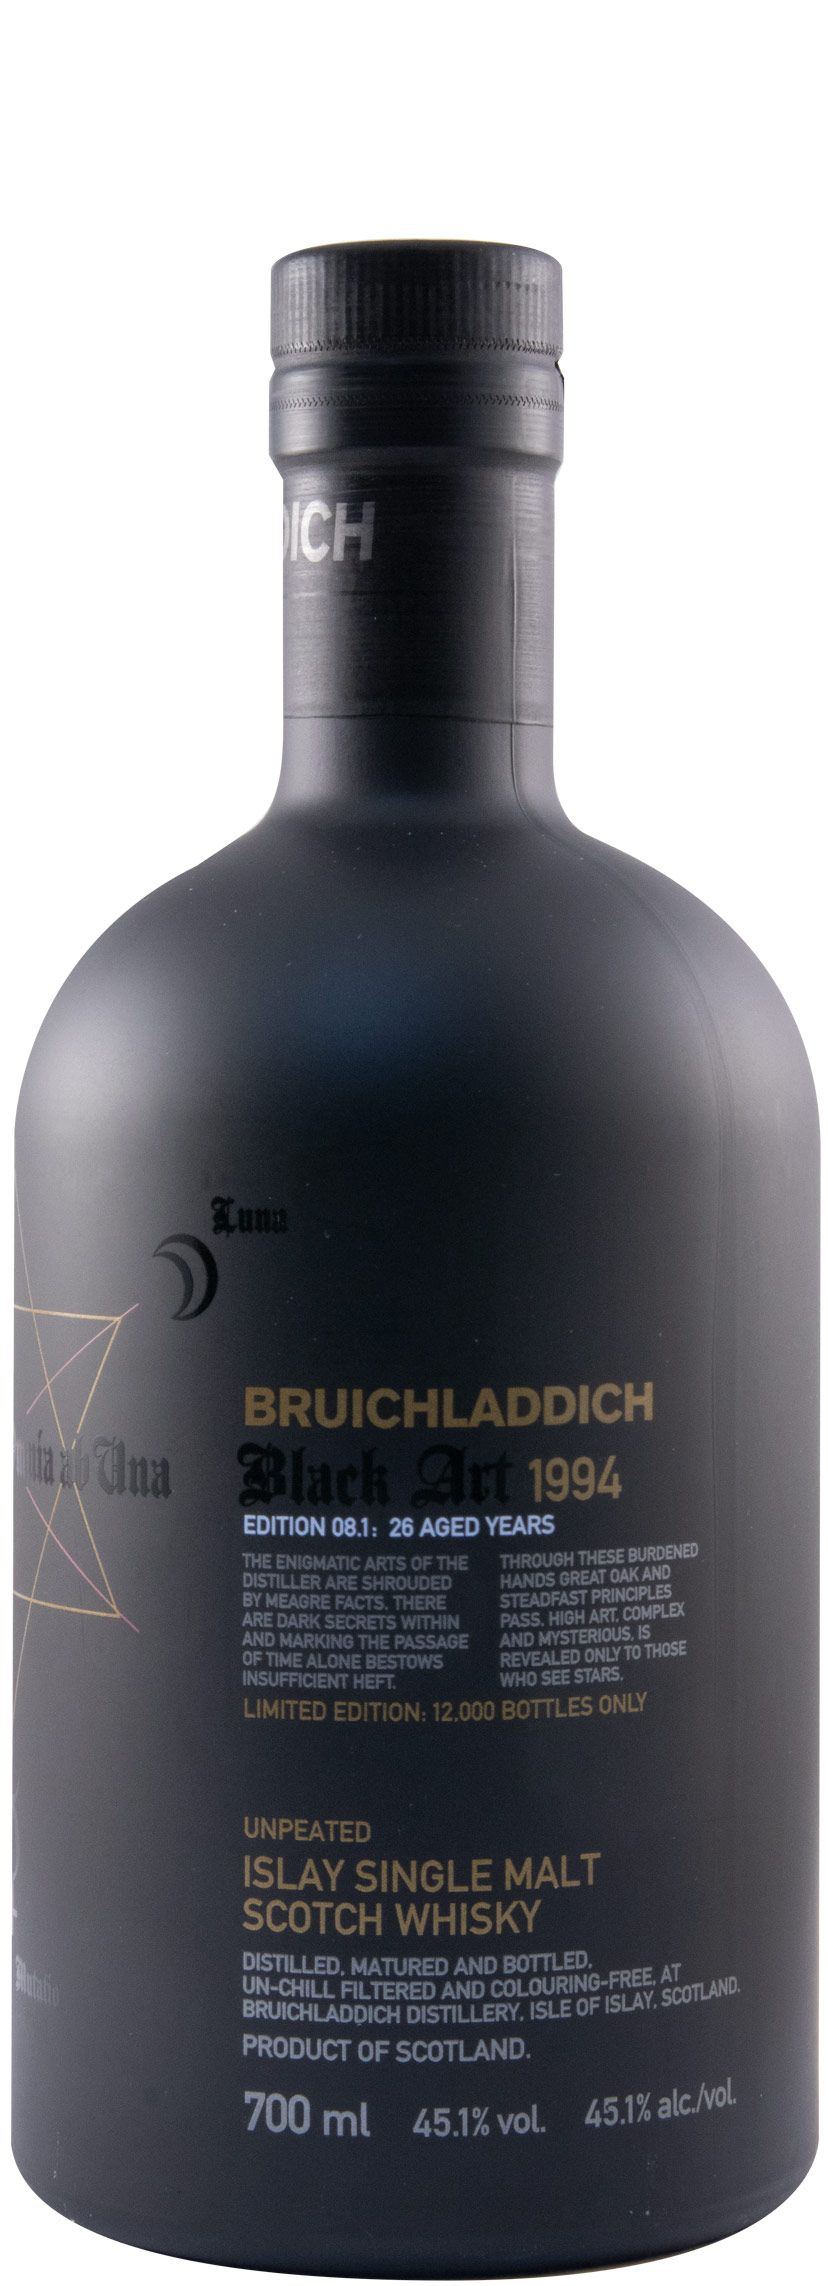 1994 Bruichladdich Black Art Edition 08.1 26 anos